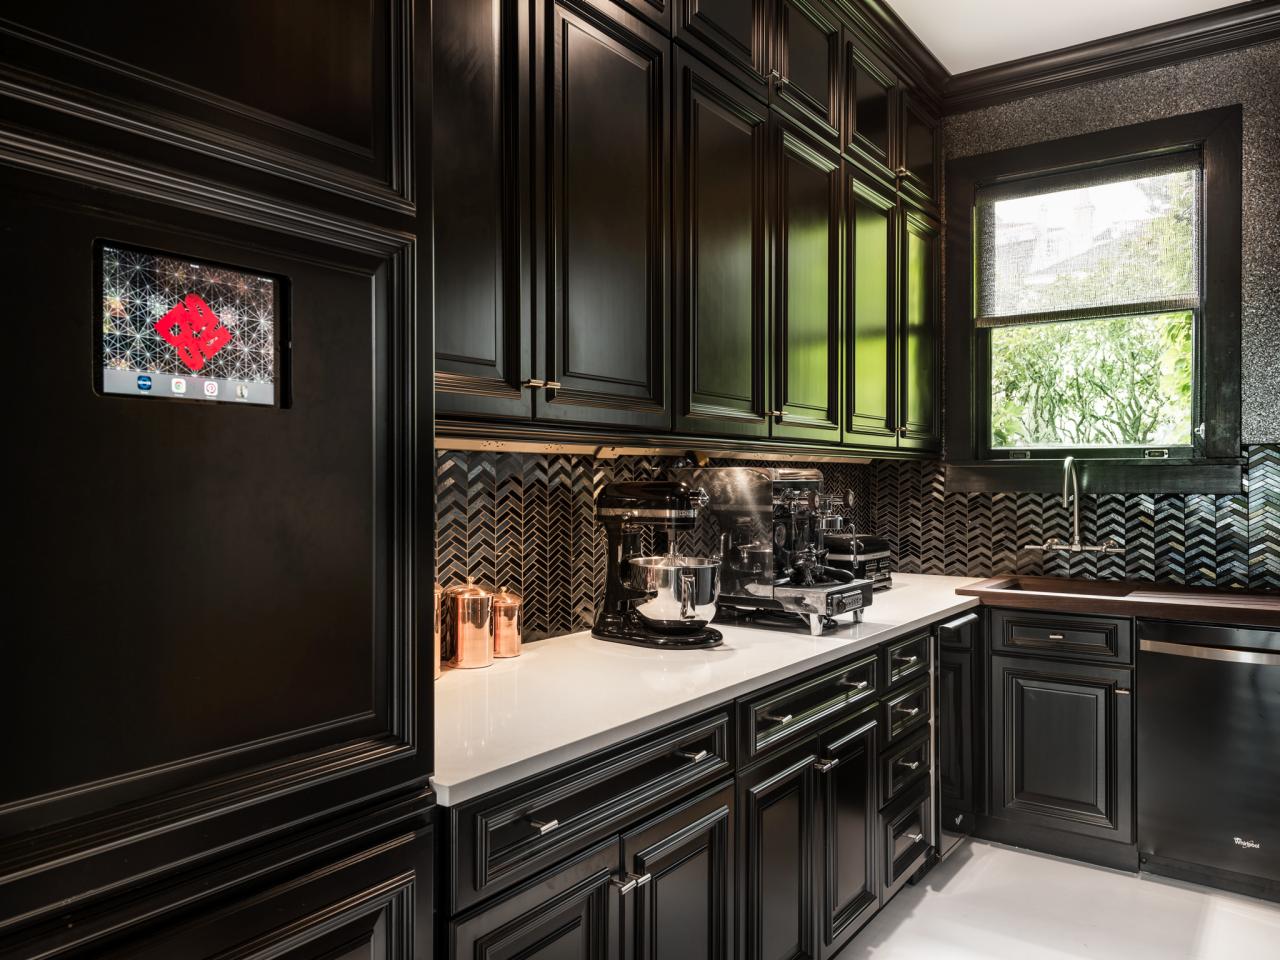 Black Kitchens Are the New White   HGTV's Decorating & Design Blog ...